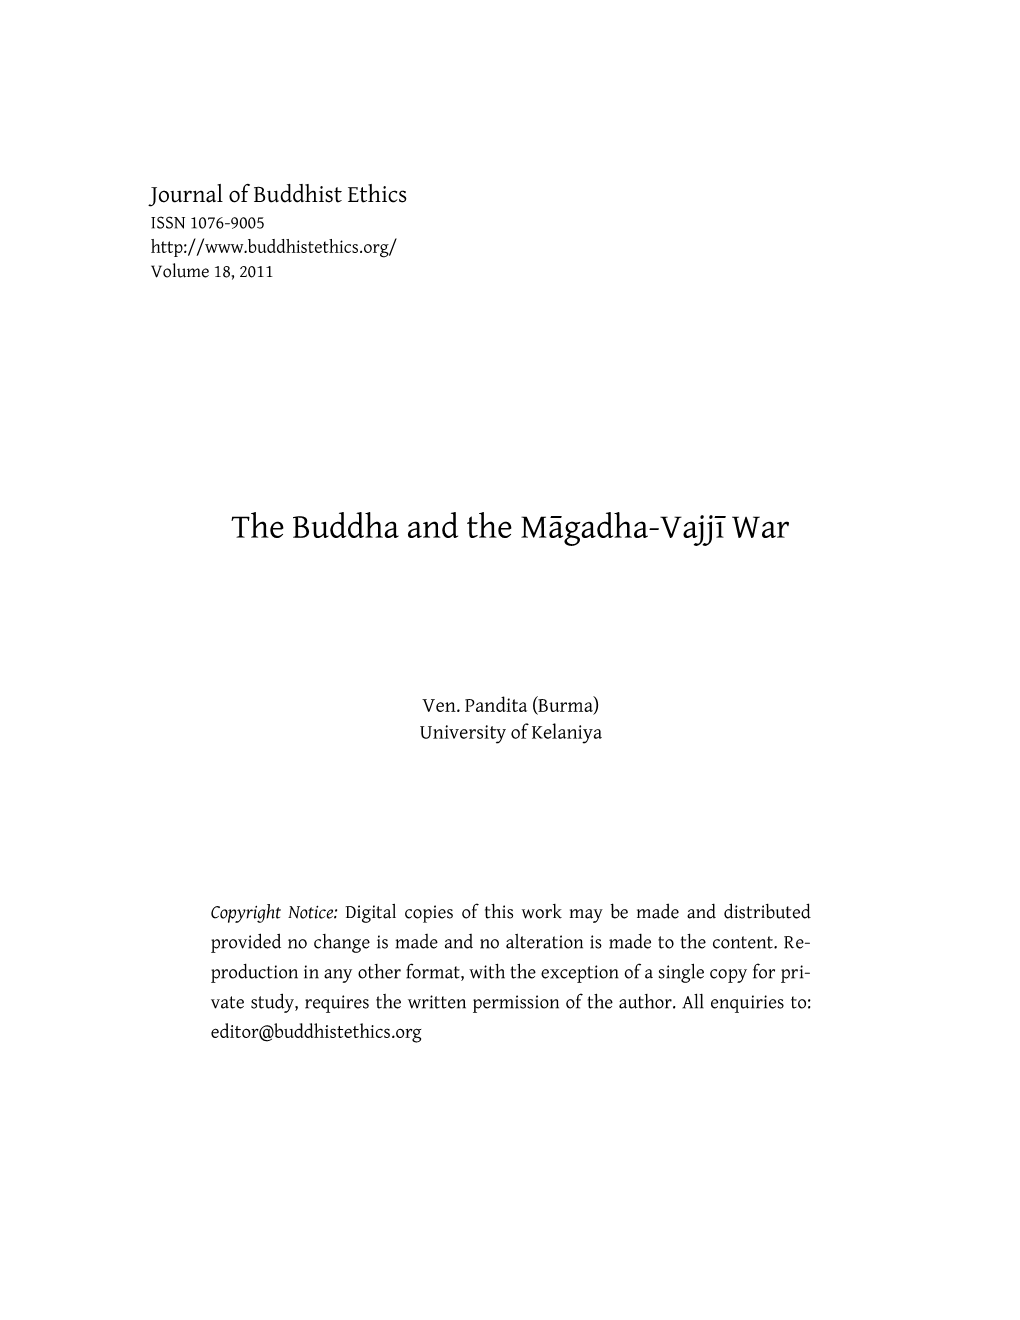 Journal of Buddhist Ethics ISSN 1076-9005 Volume 18, 2011